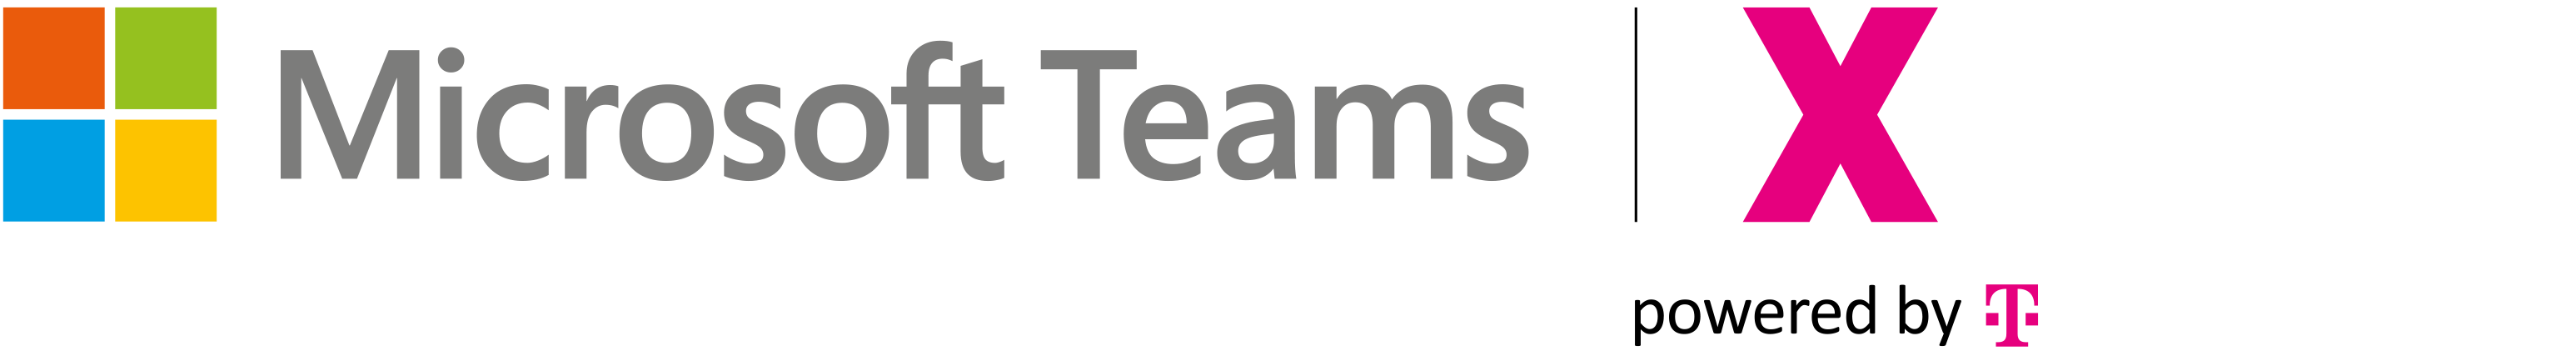 Microsoft Teams X powered by Telekom Logo